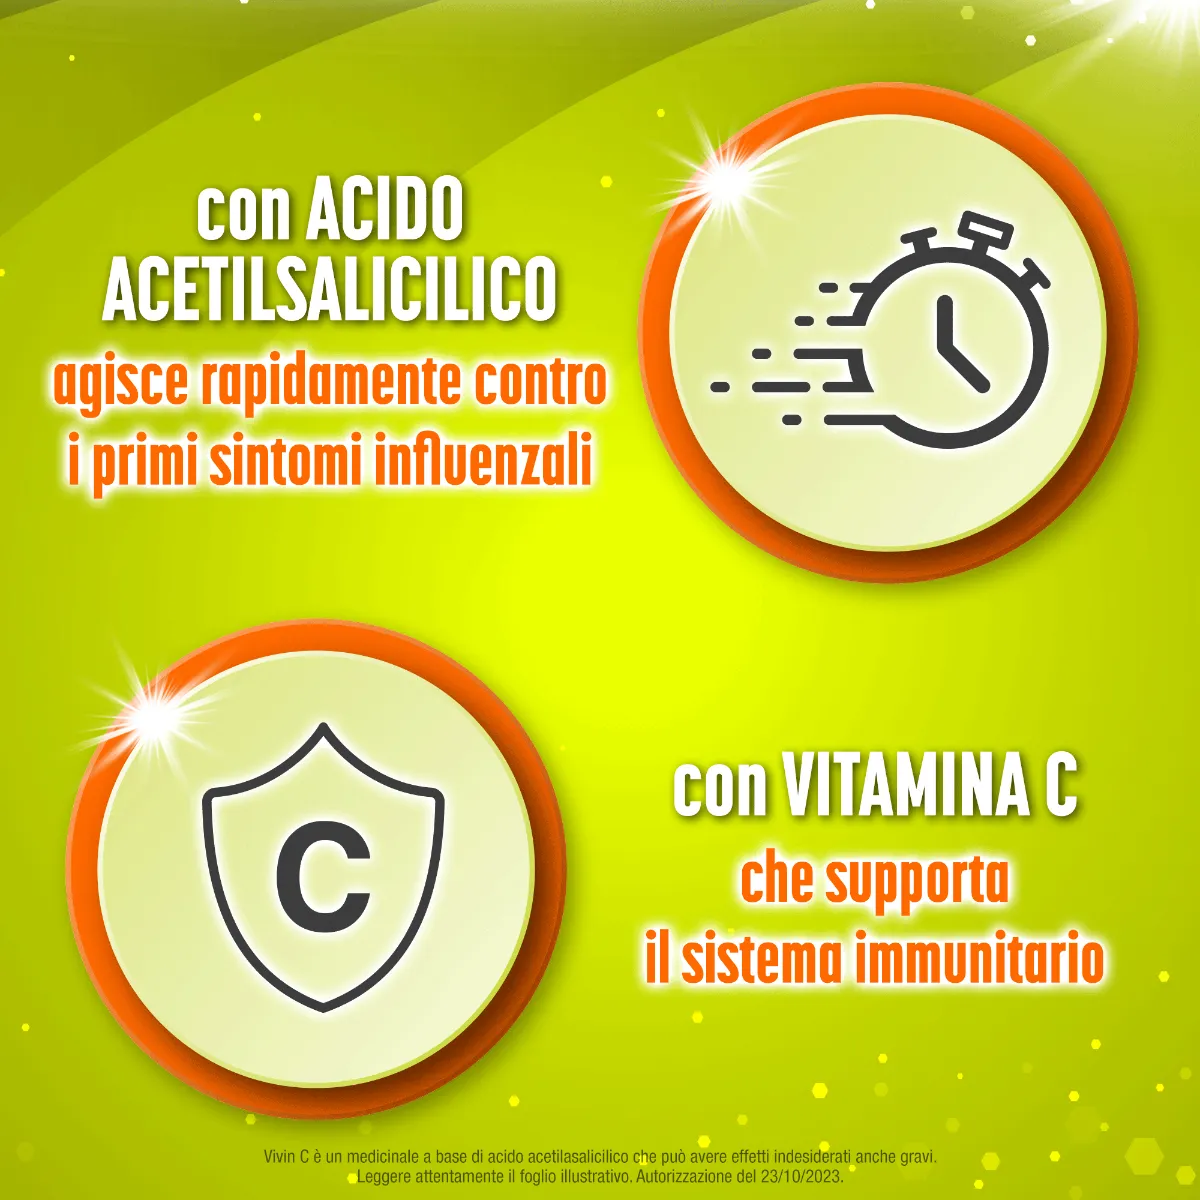 Vivin C 330 + 200 mg 20 Compresse Effervescenti Sintomi Influenzali